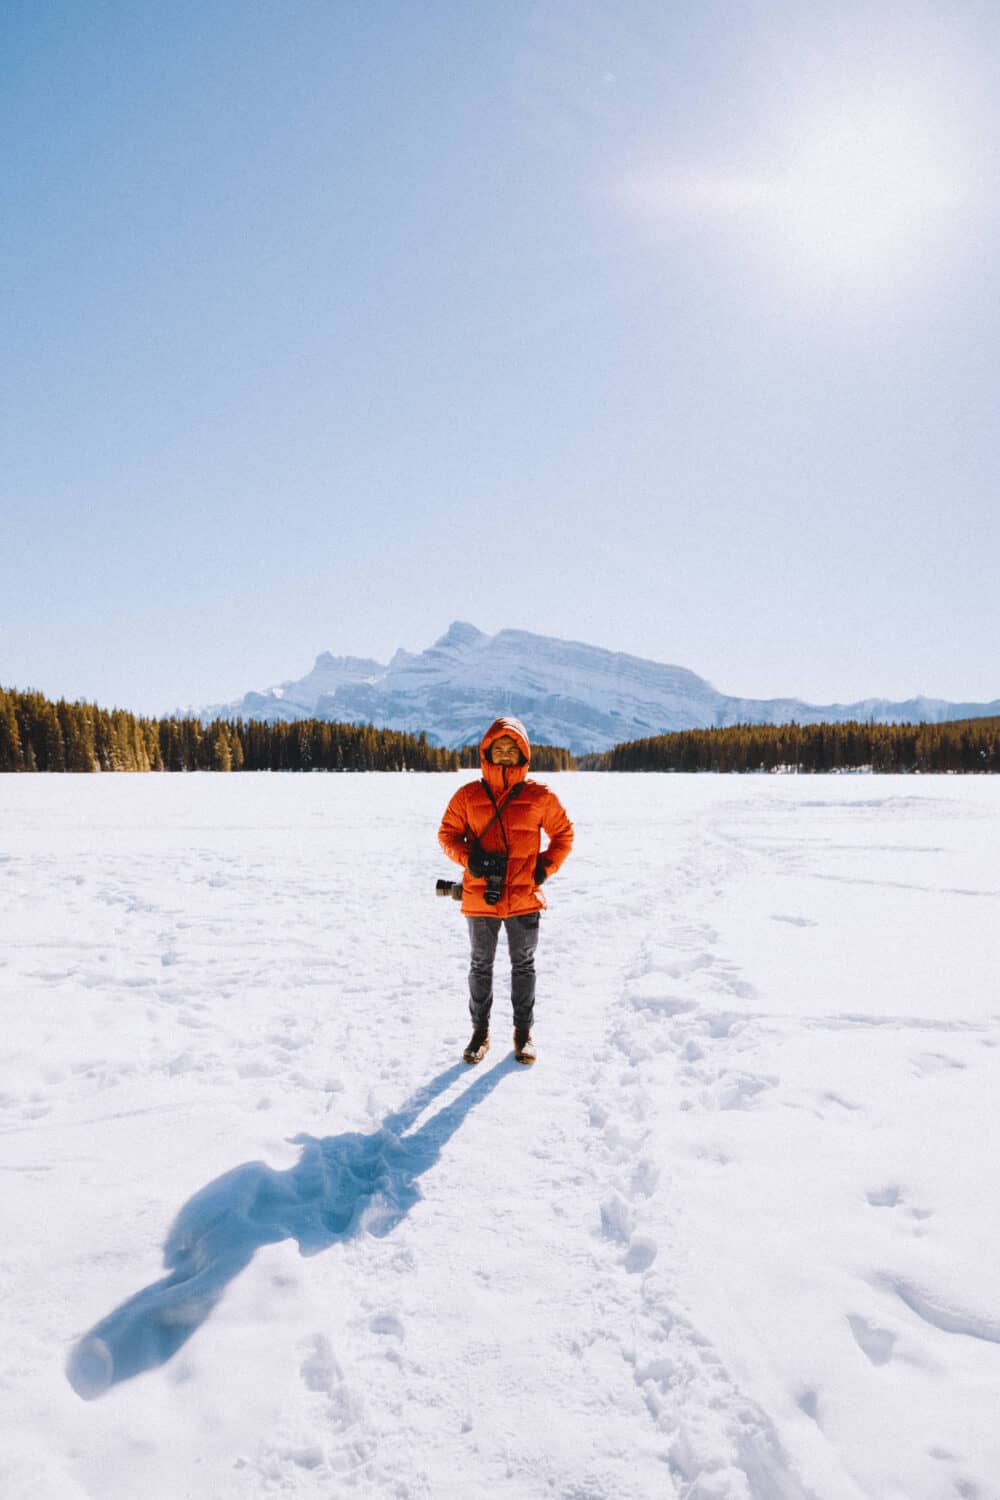 Banff in Winter (Berty Mandagie at Two Jack Lake)